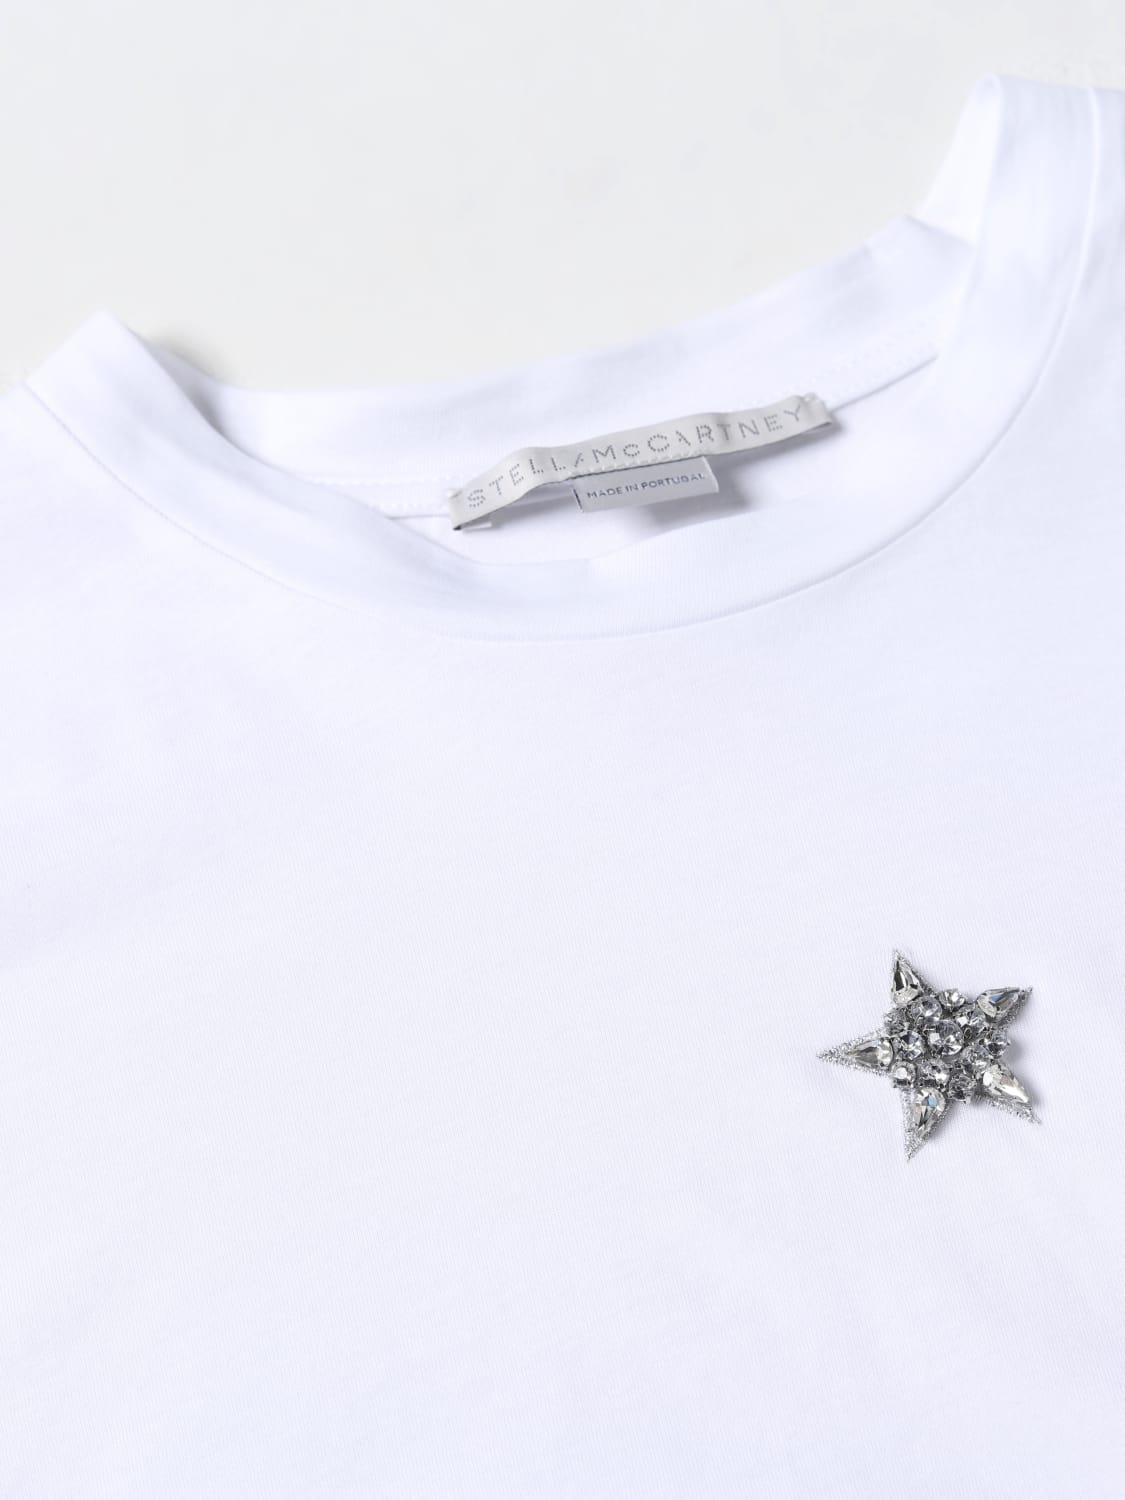 STELLA MCCARTNEY: t-shirt for women - White | Stella Mccartney t